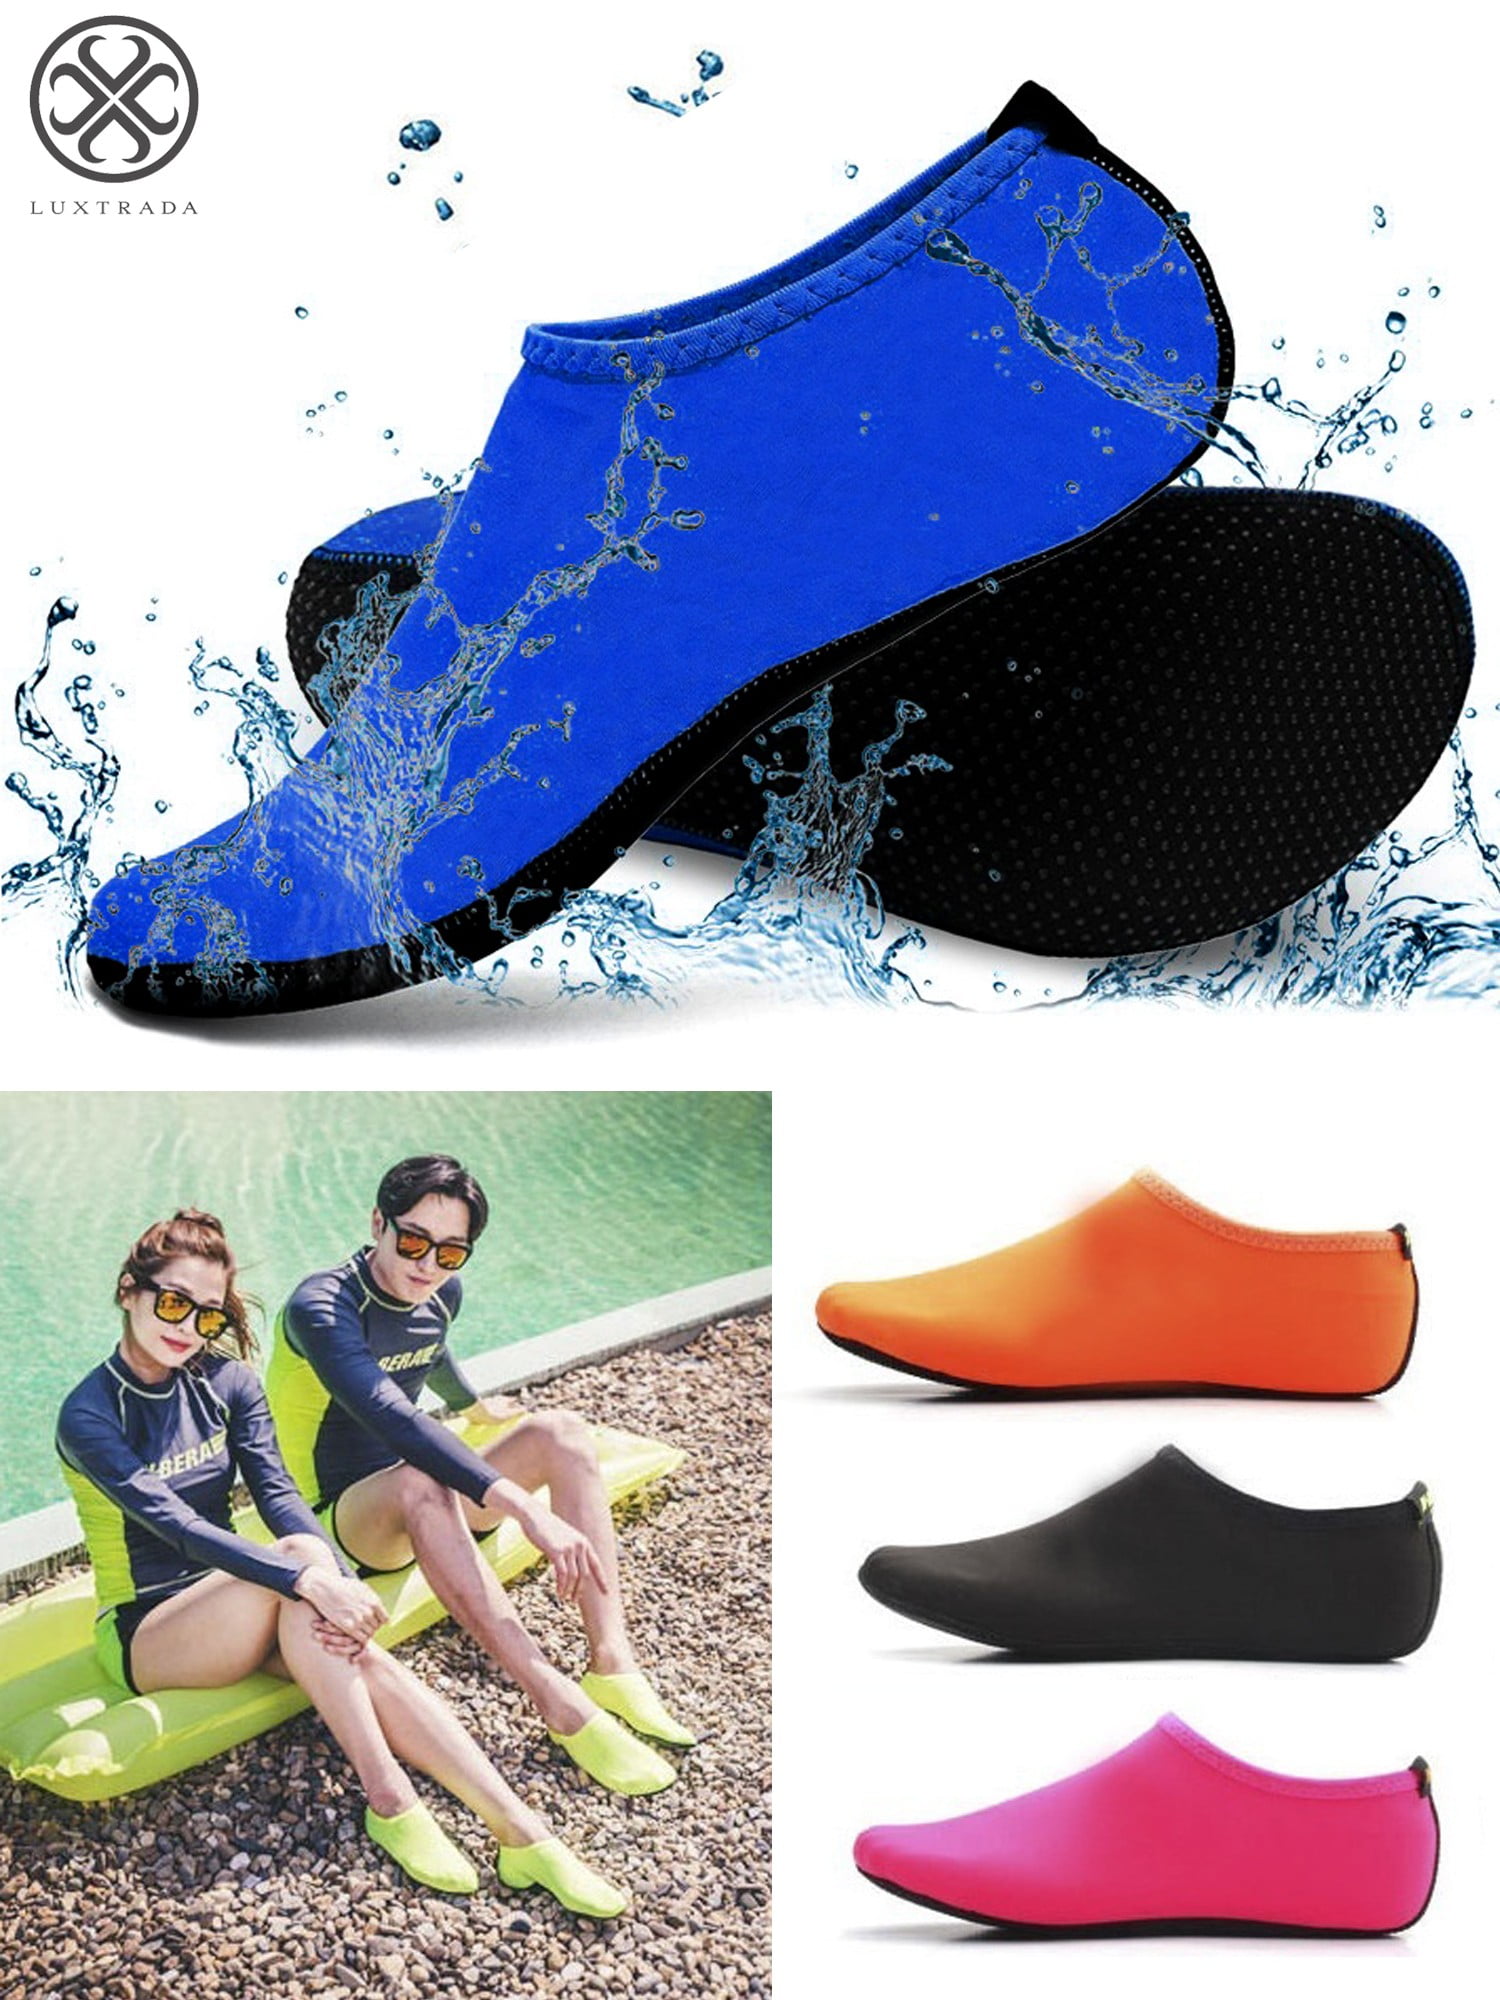 CUSHY Men/Women Water Sport Shoes Non-Slip Mesh Aqua Socks Yoga Exercise Pool Beach Dance Swimming Surfing Shoes Red M